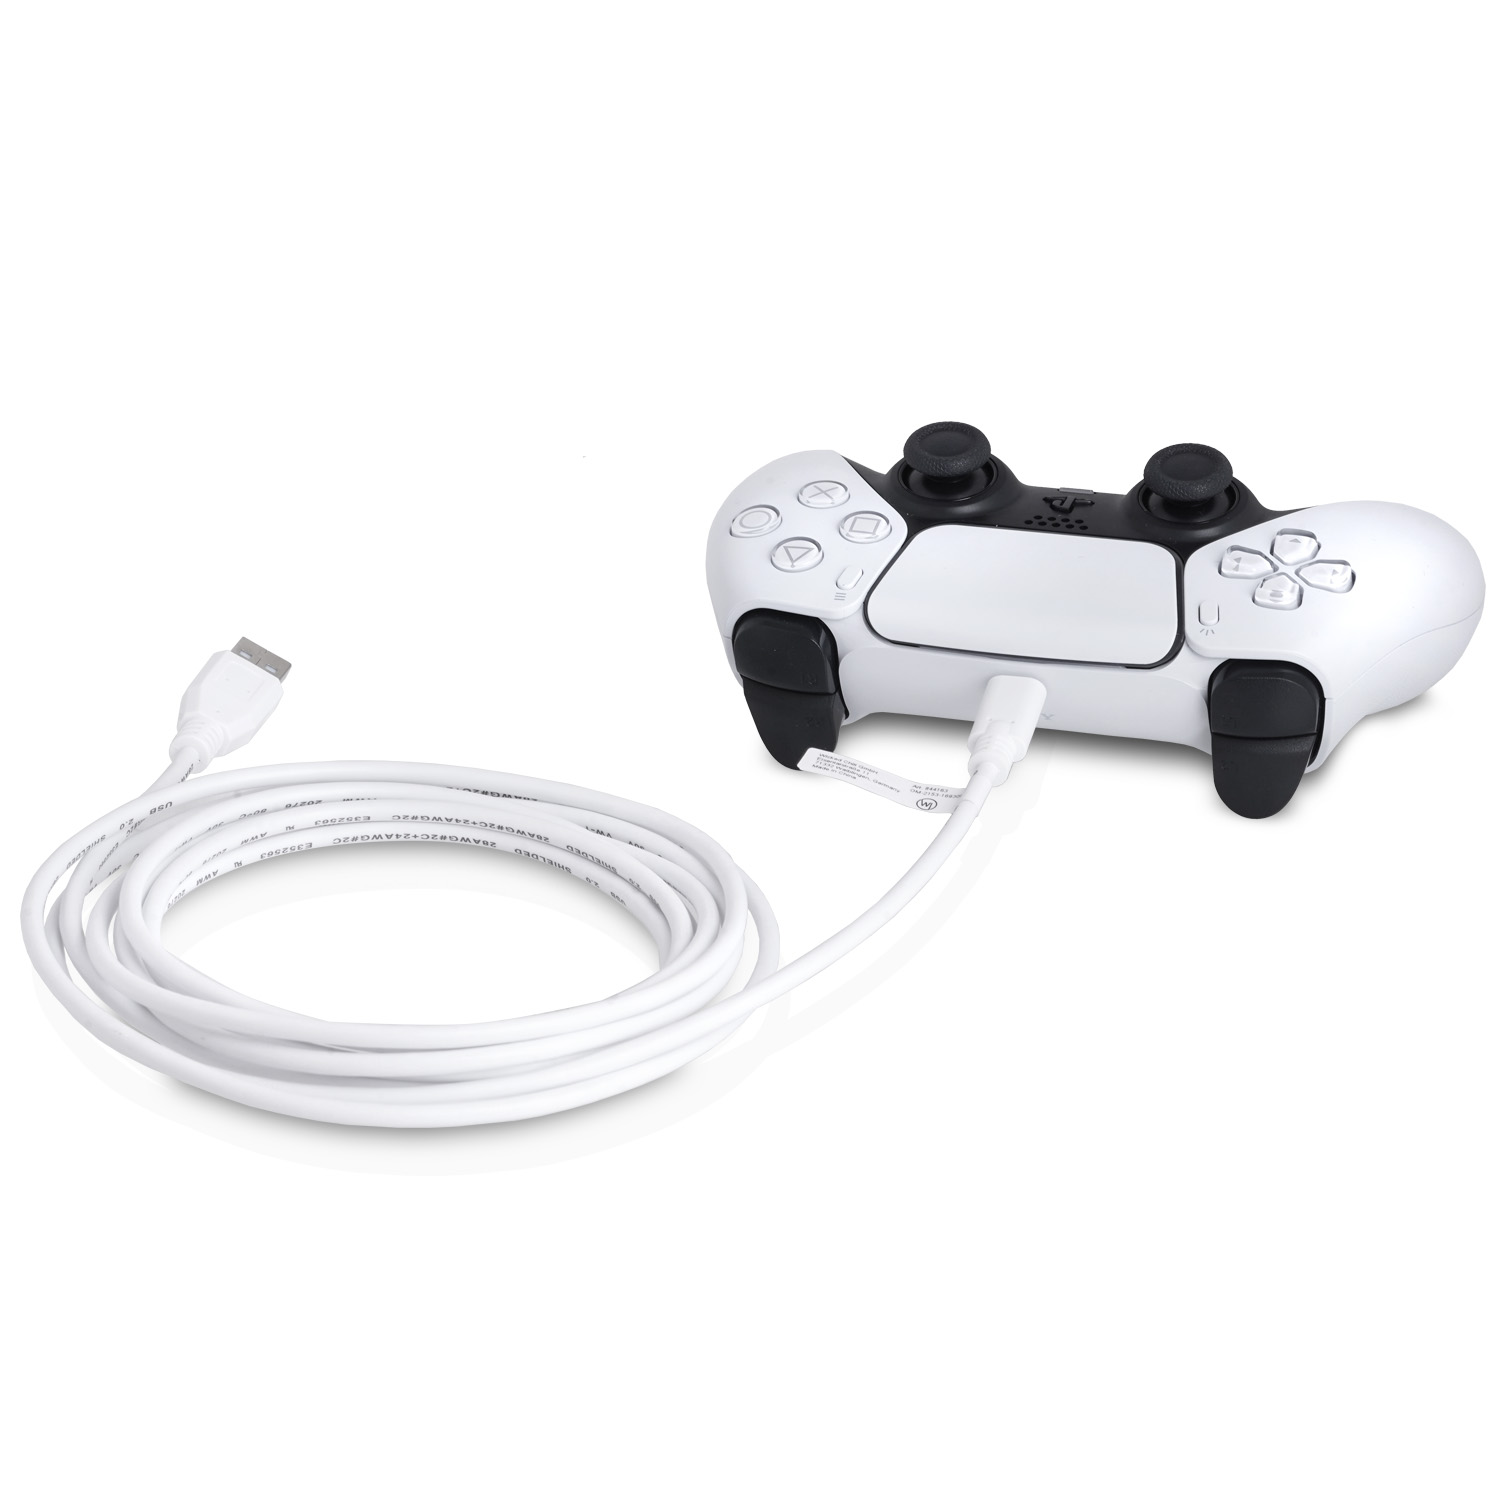 Ladekabel, m, USB Kabel Series Pro, 3 Xbox für X WICKED Controller, S DualSense USB PS5 weiss C 3m CHILI und Gamepad, Series / C Switch